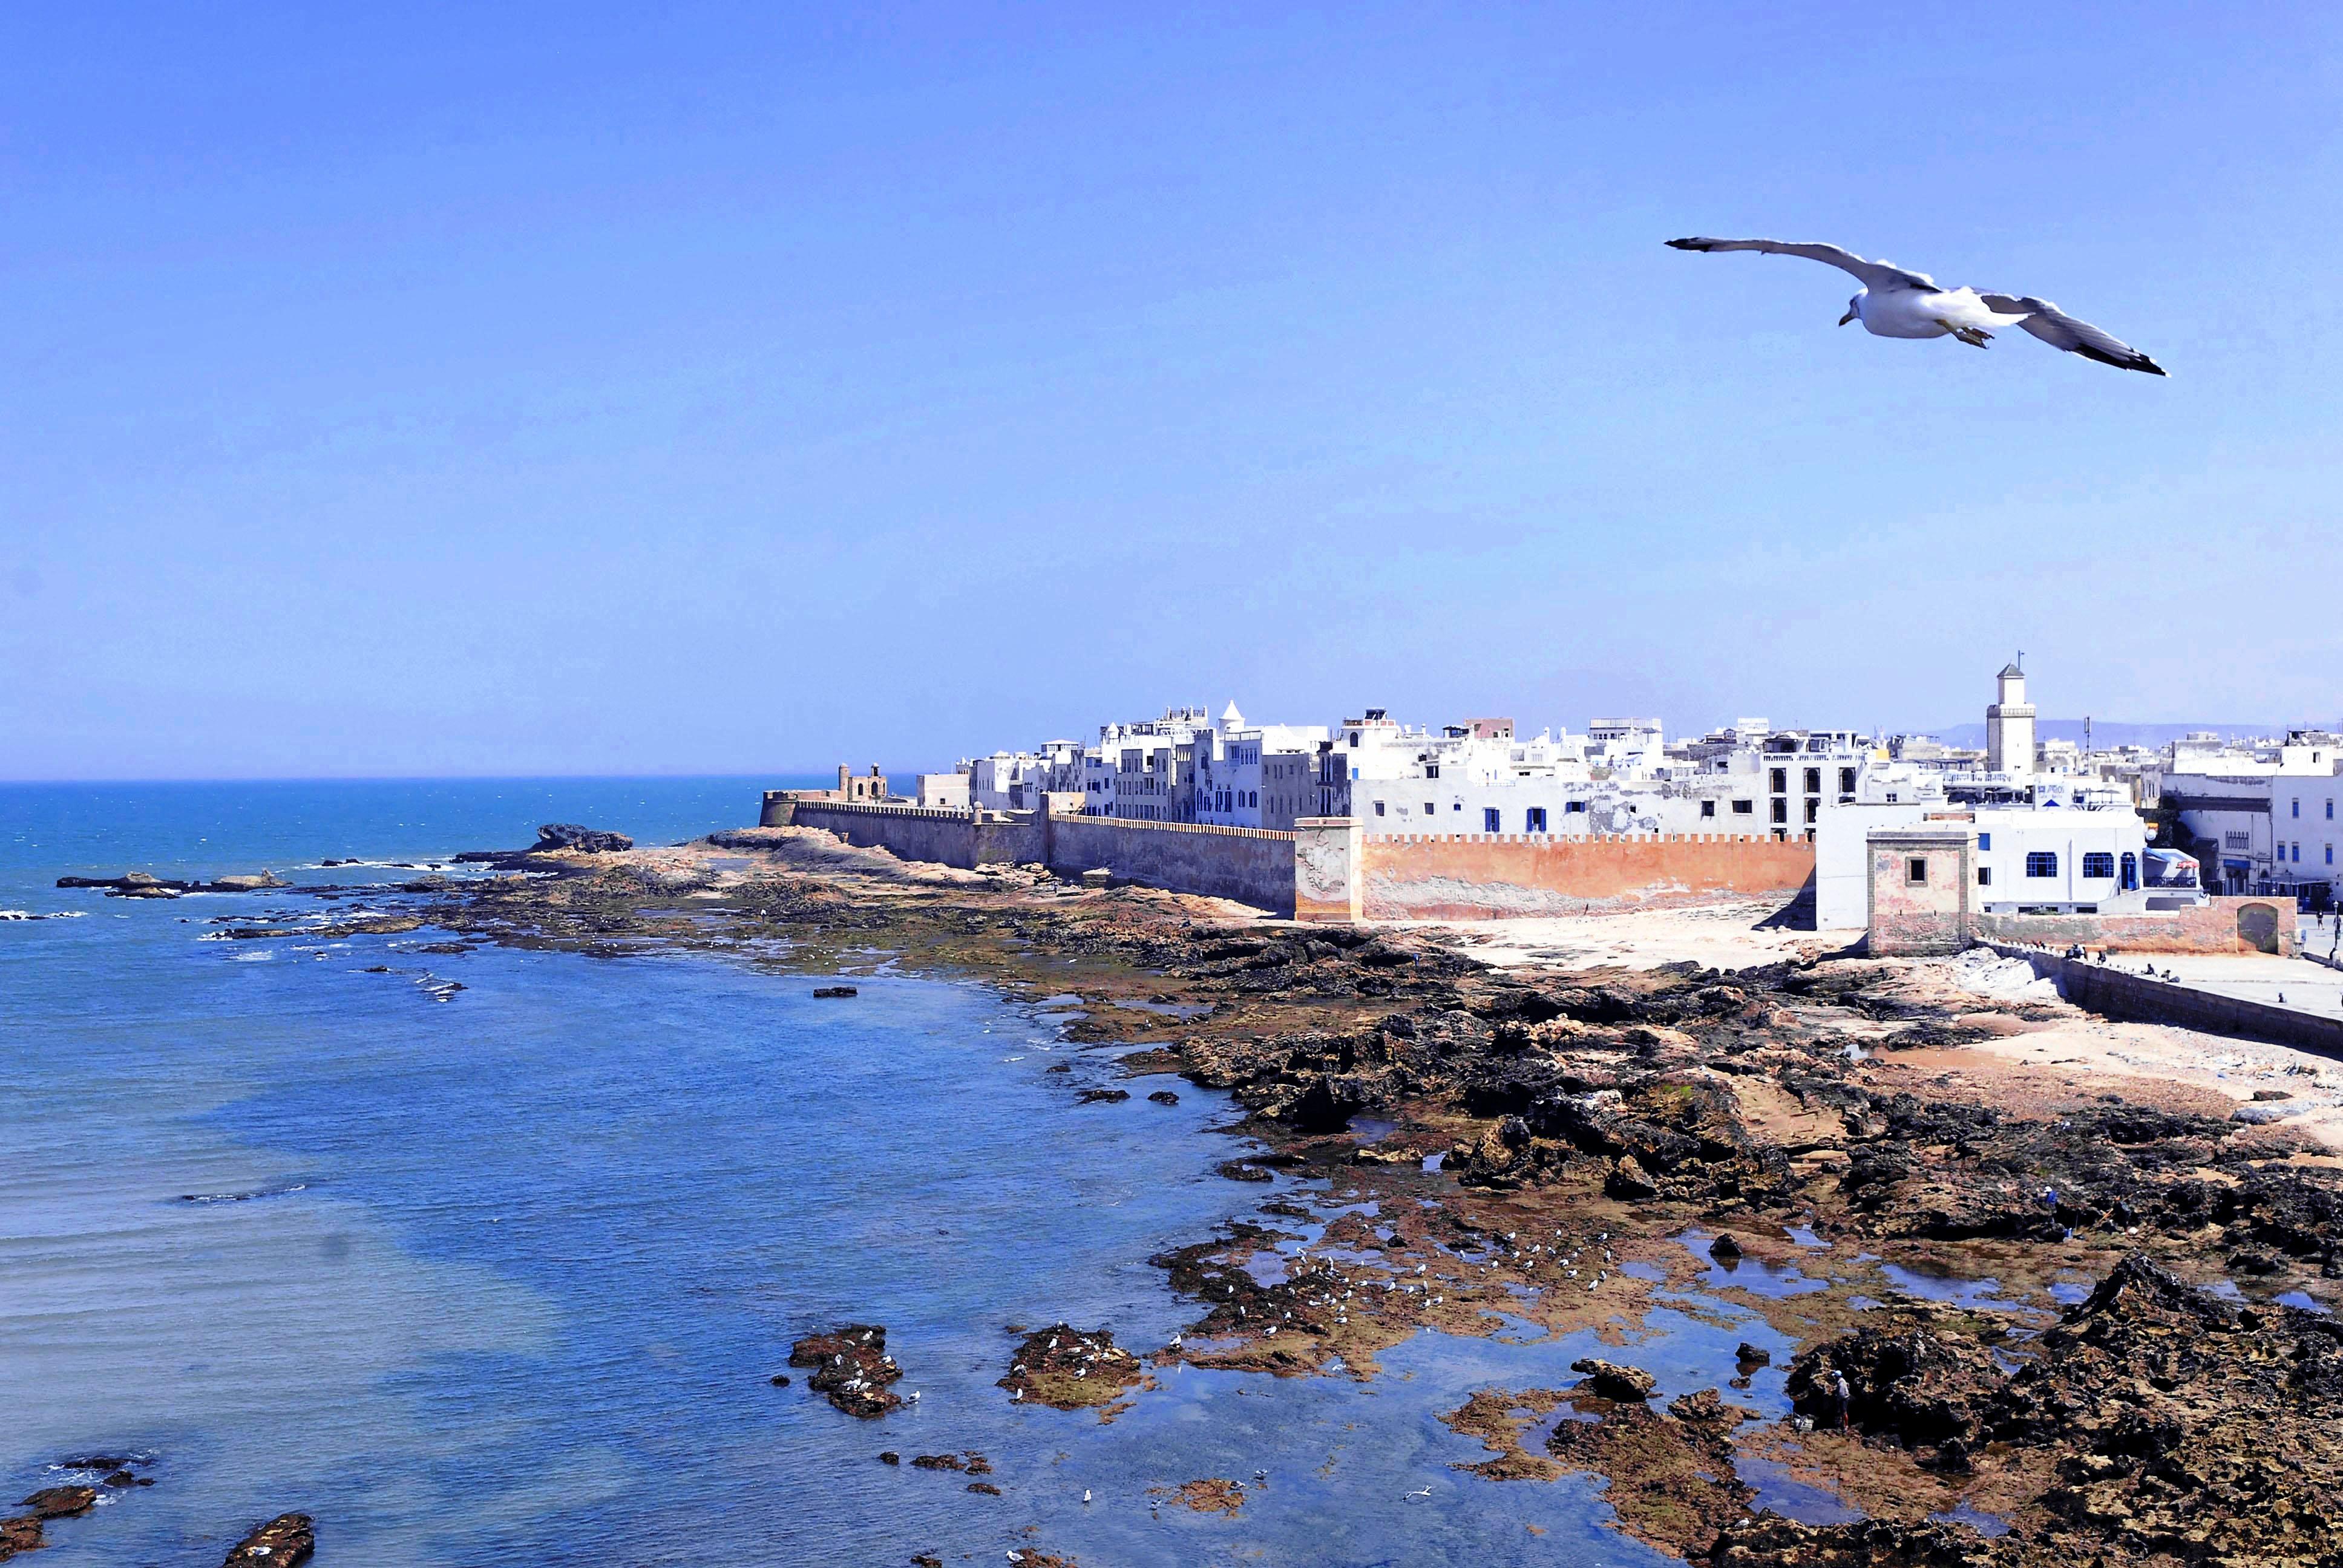 10 days magical Morocco tour from Marrakech to explore the coastline beaches